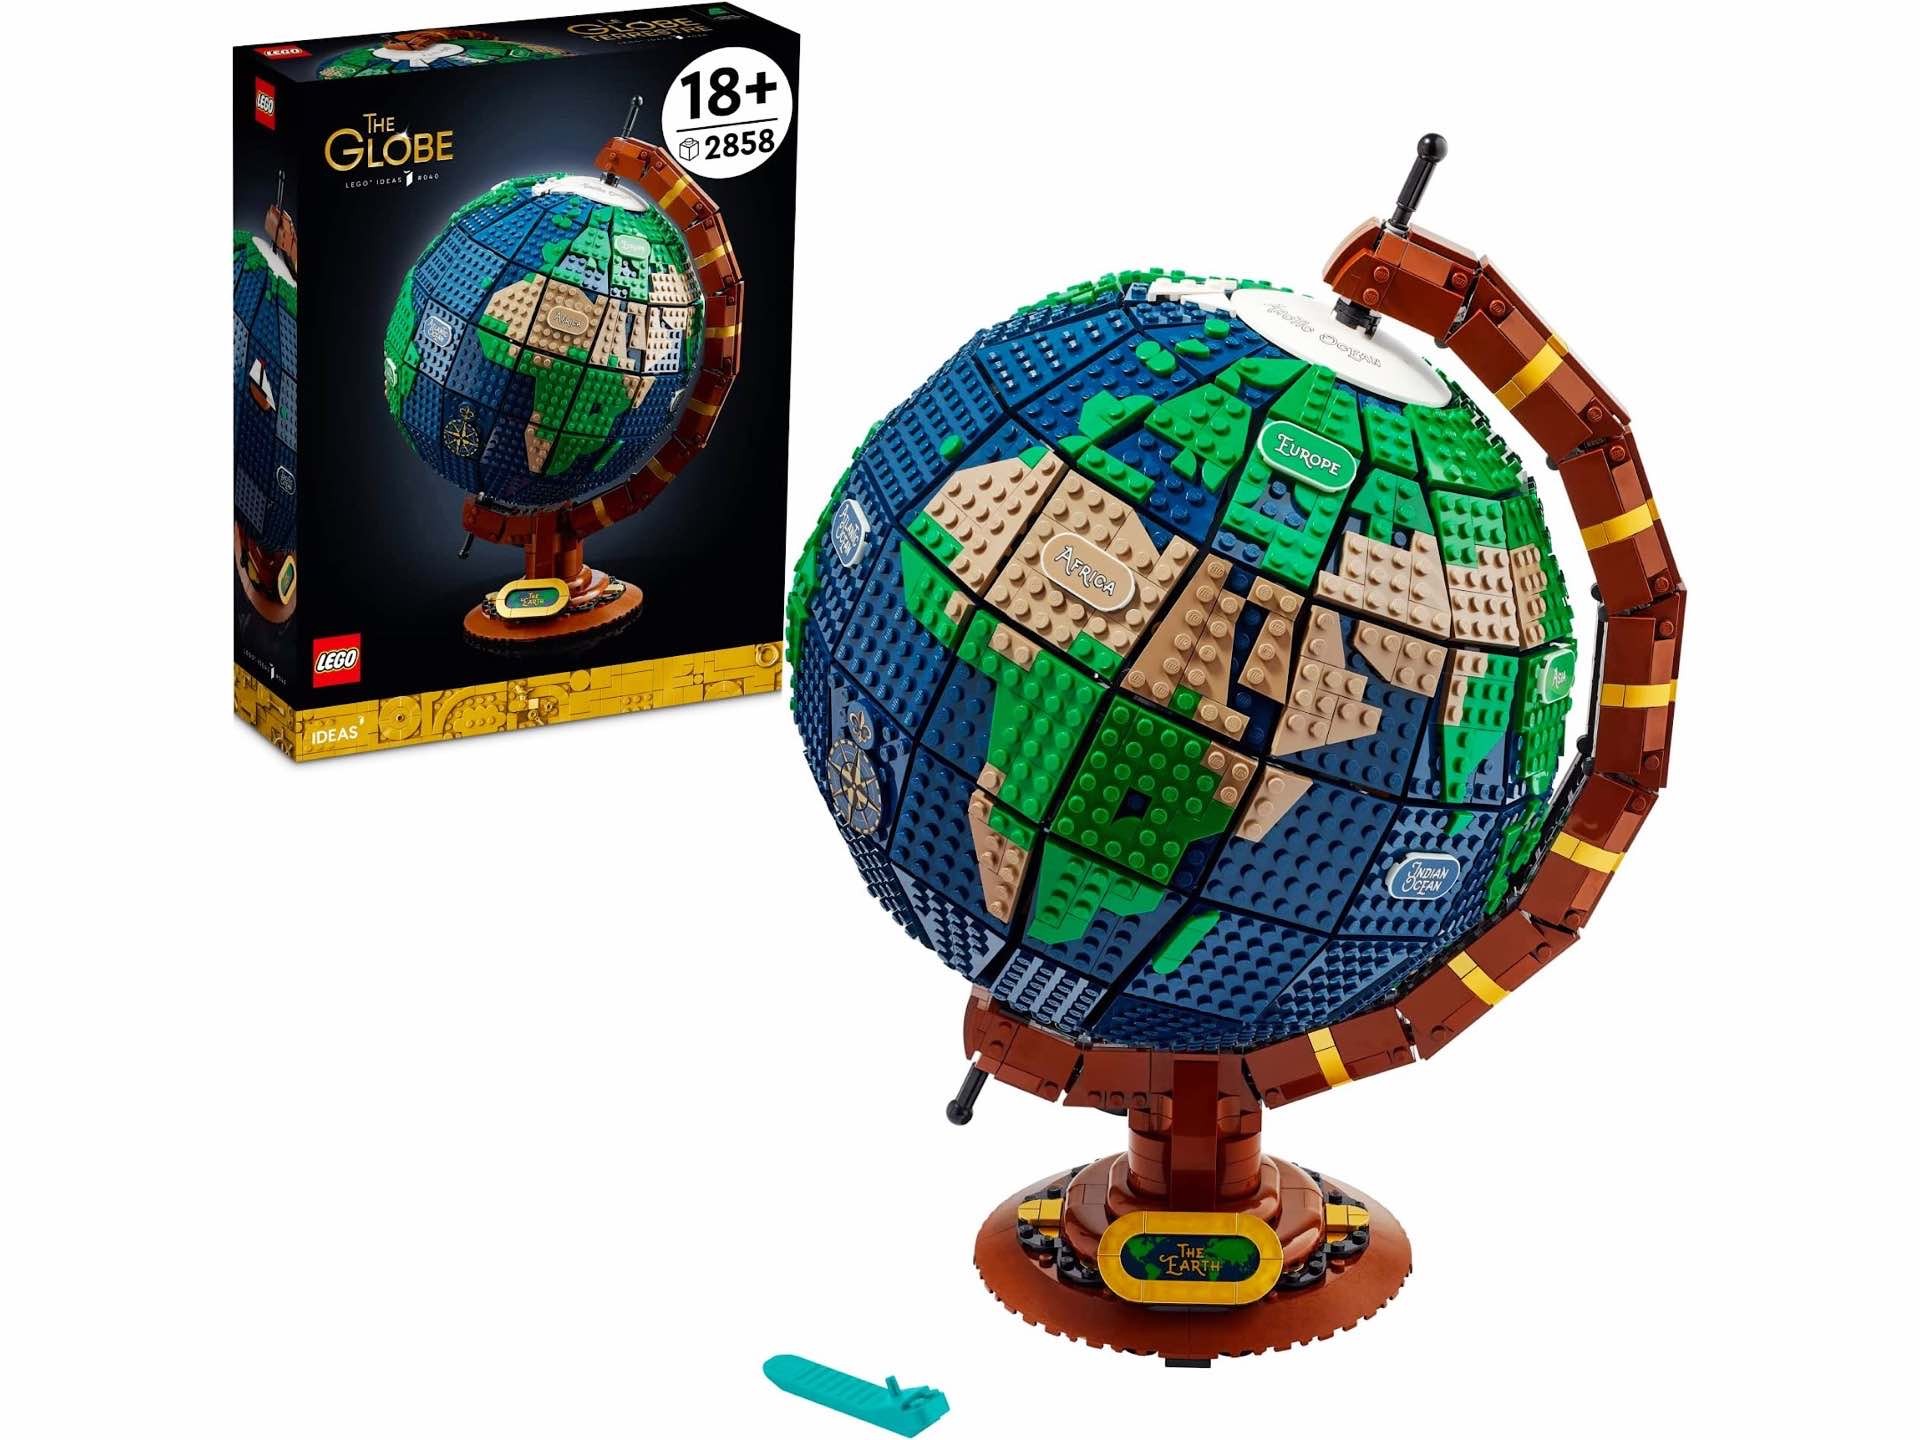 LEGO Ideas “The Globe” building set. ($230)